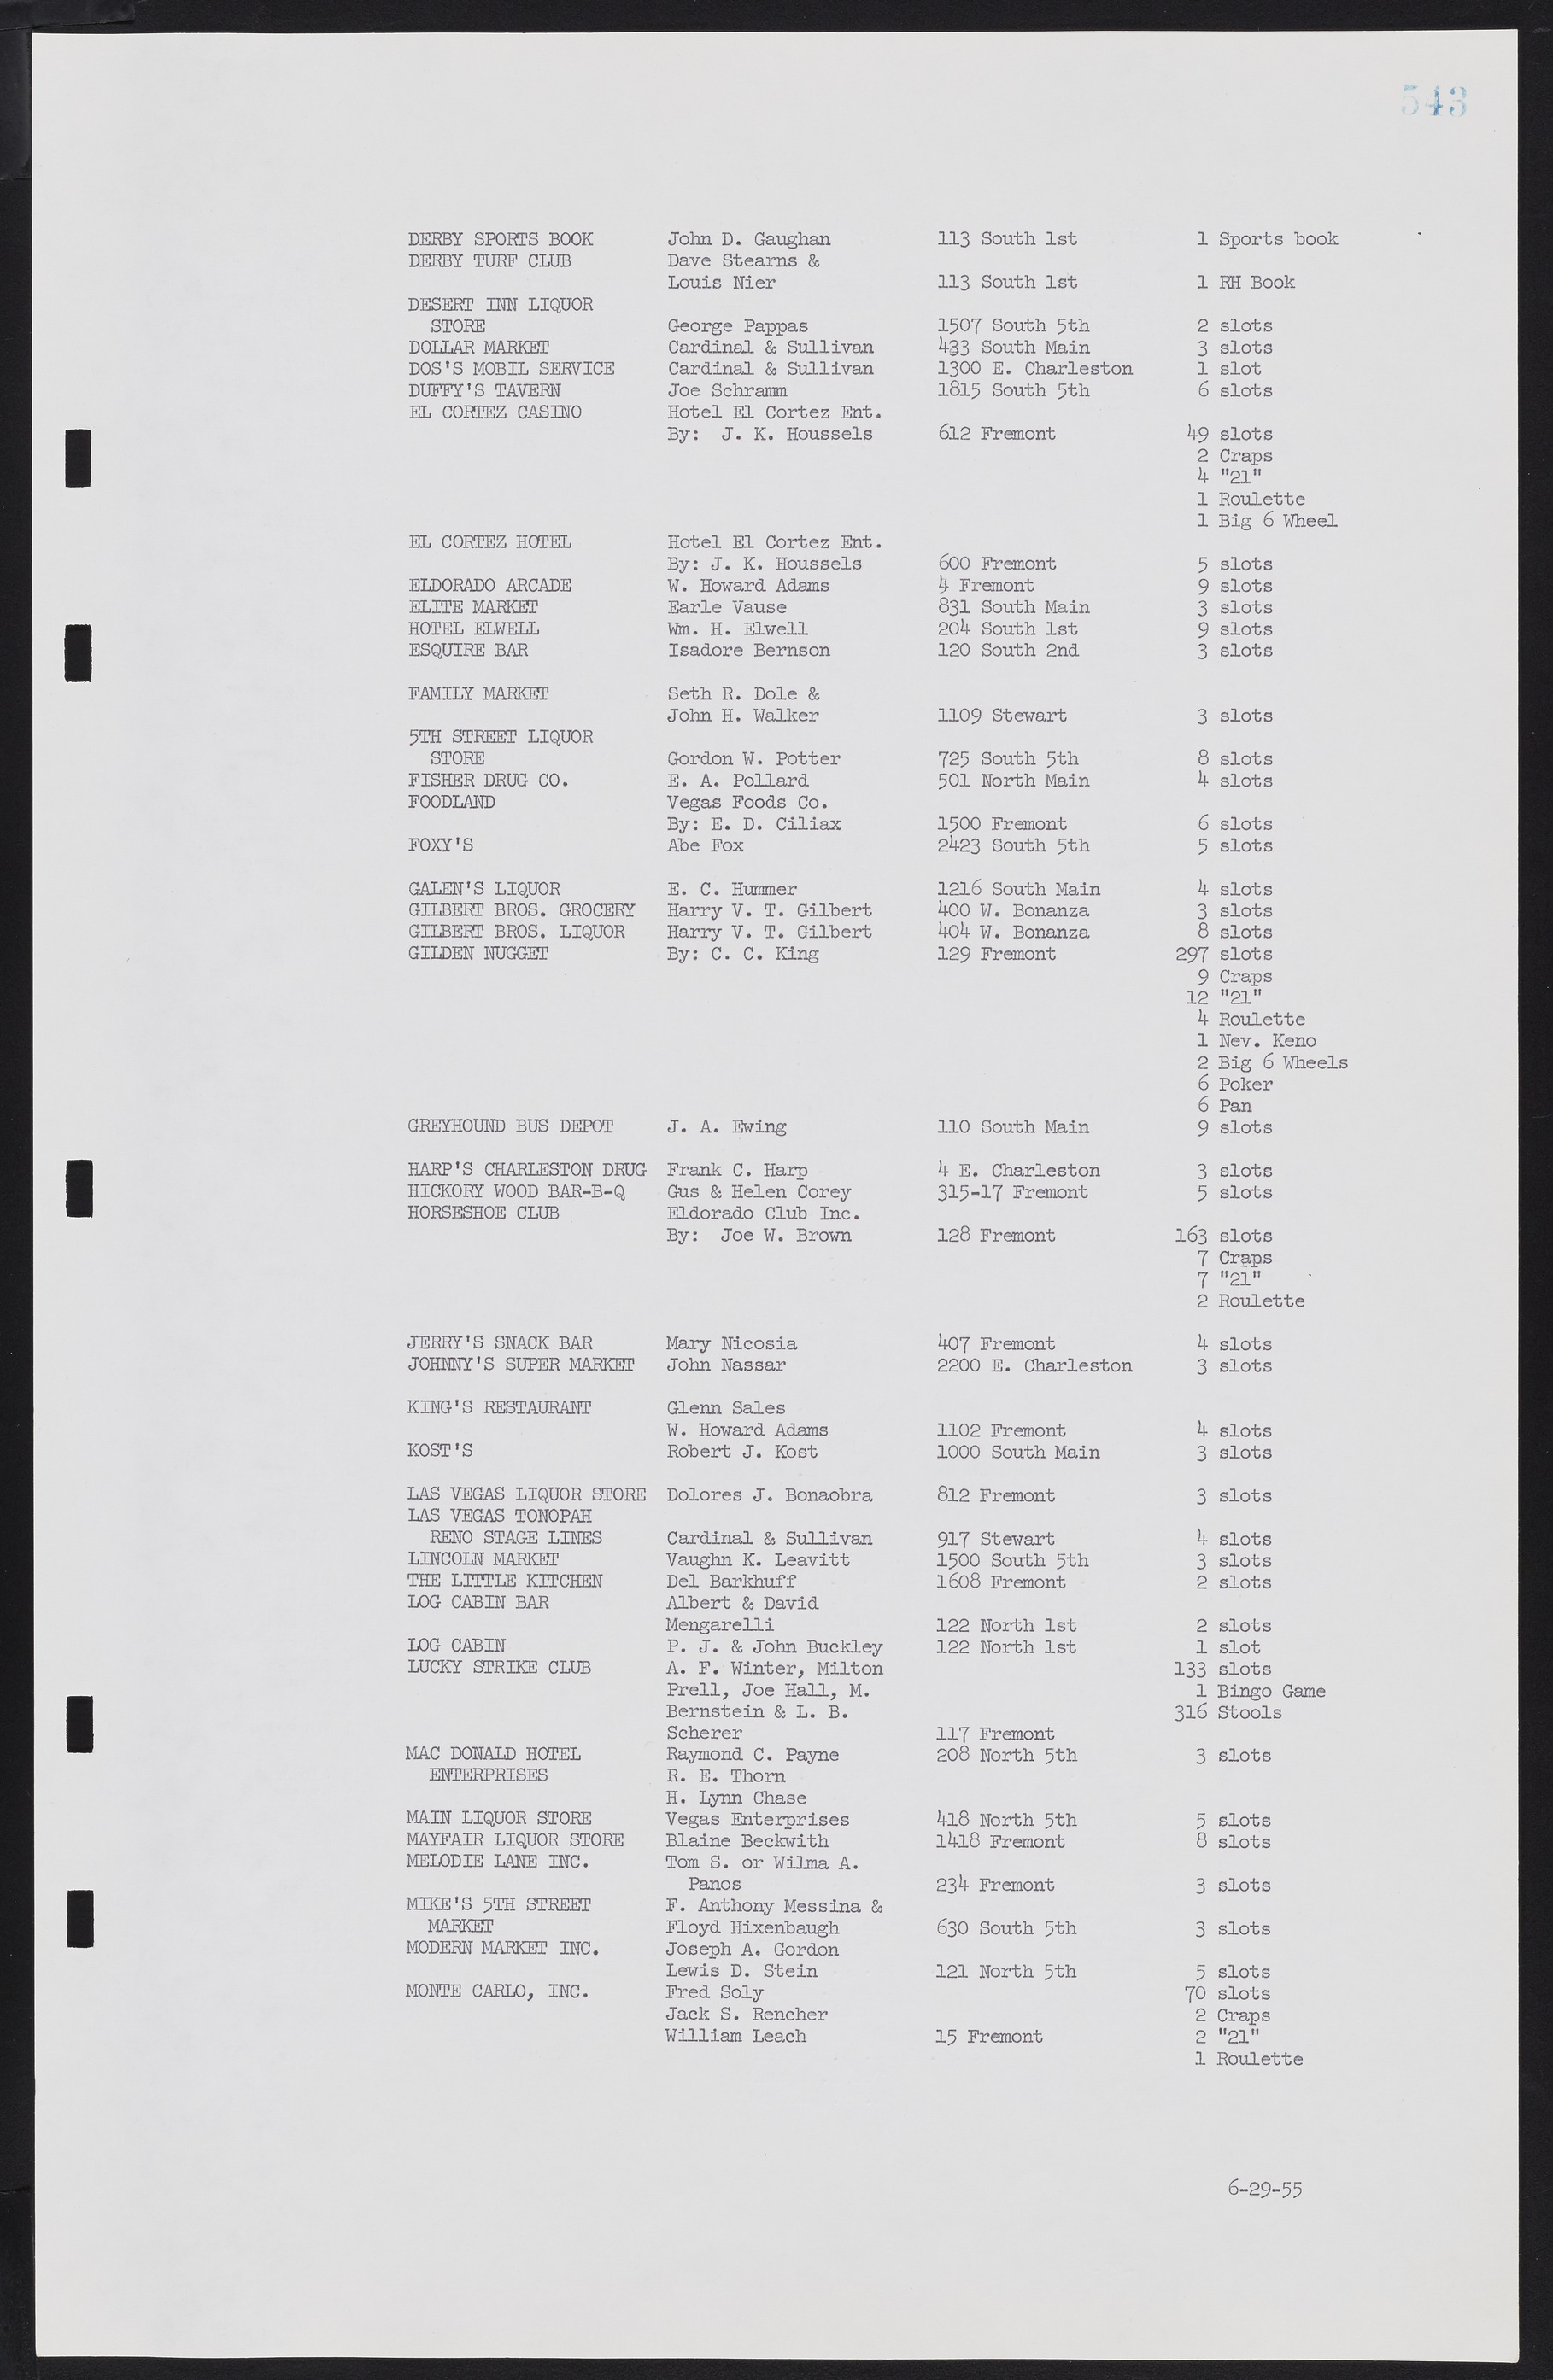 Las Vegas City Commission Minutes, February 17, 1954 to September 21, 1955, lvc000009-549